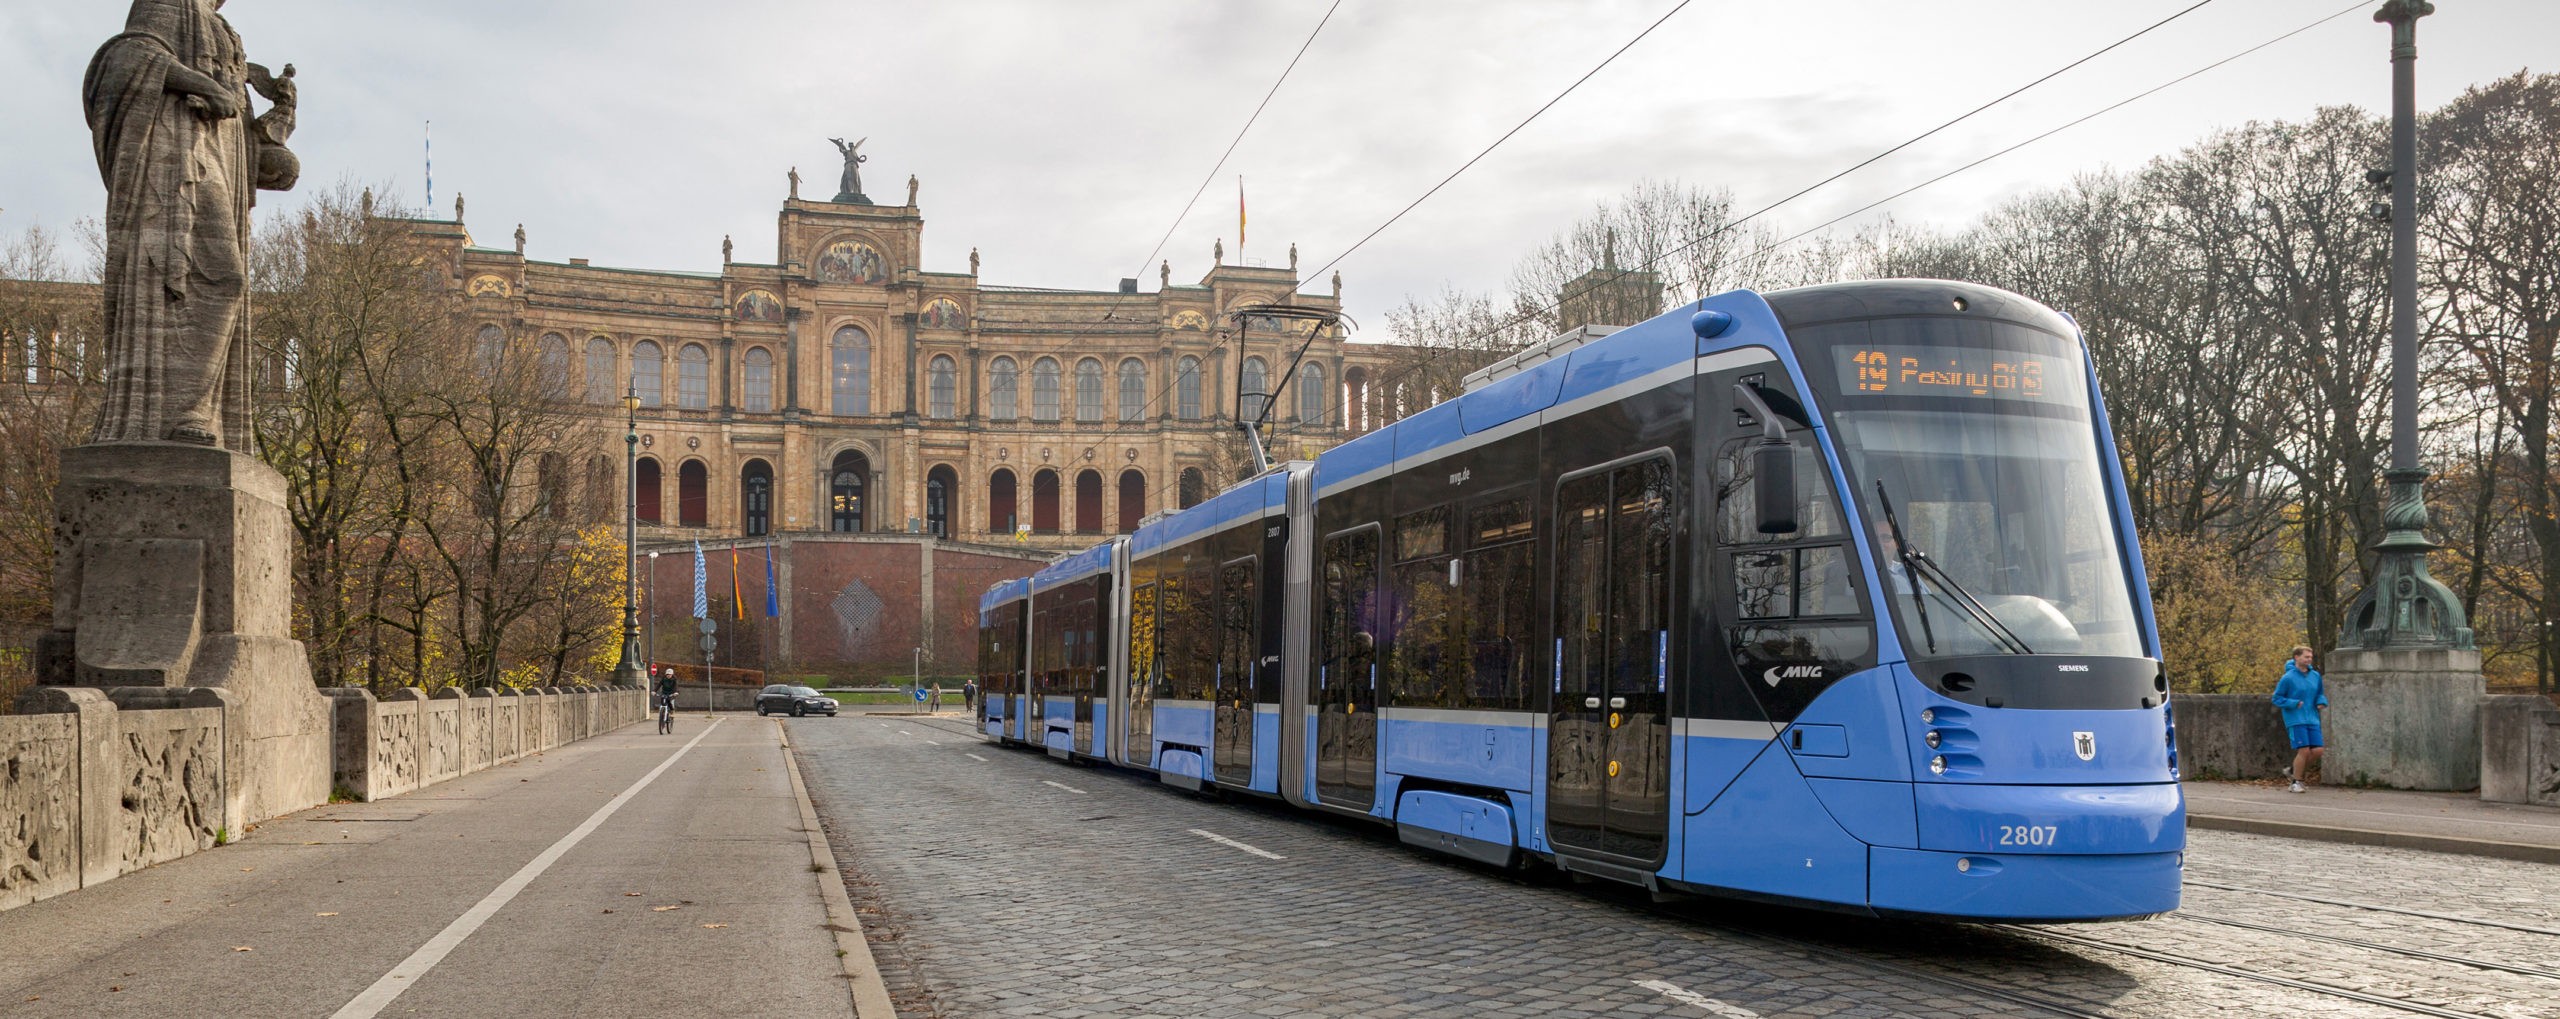 Siemens Avenio tram in Munich (cropped)